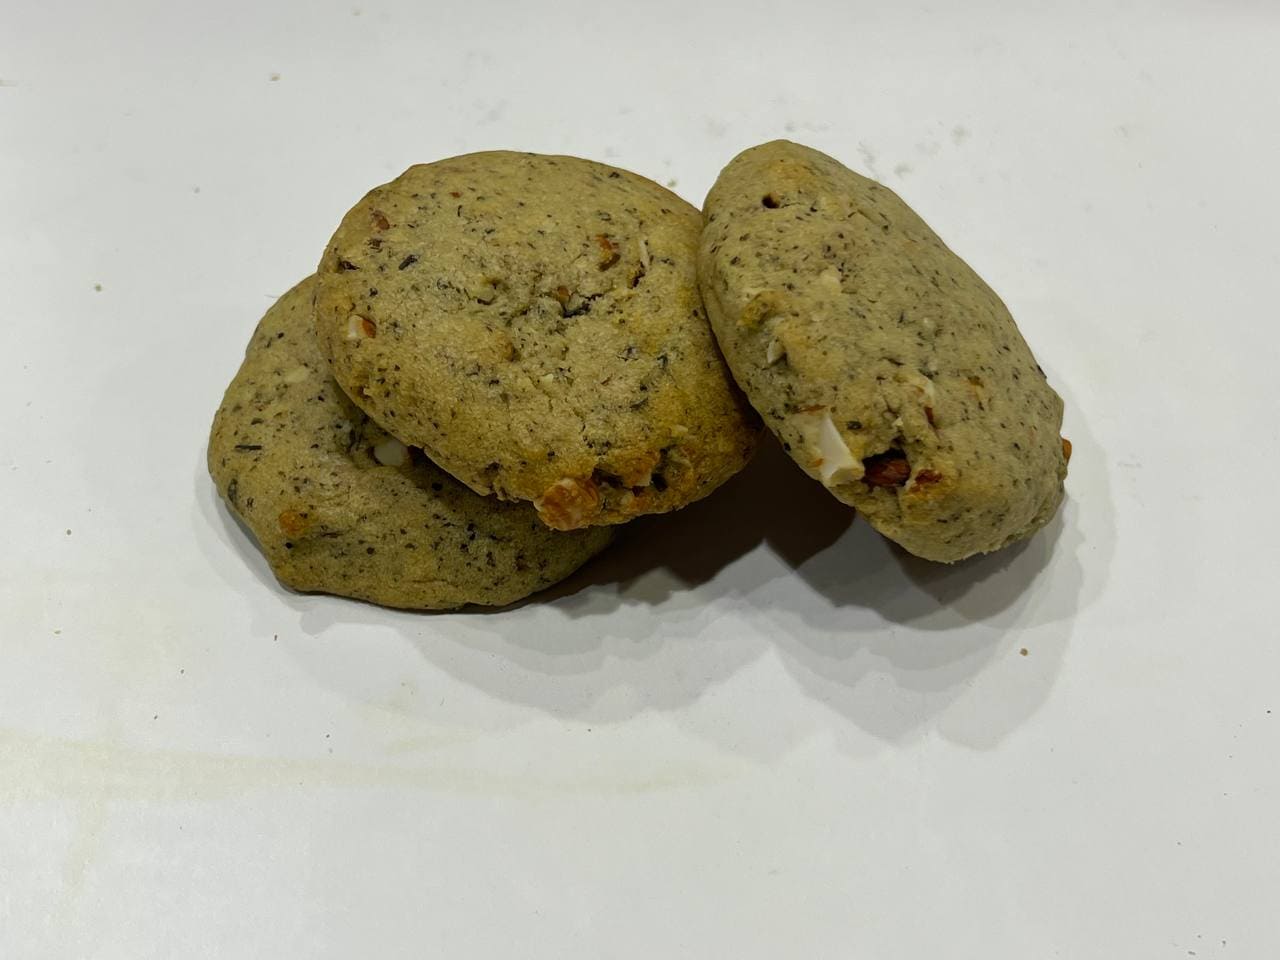 Plain Matcha Cookies